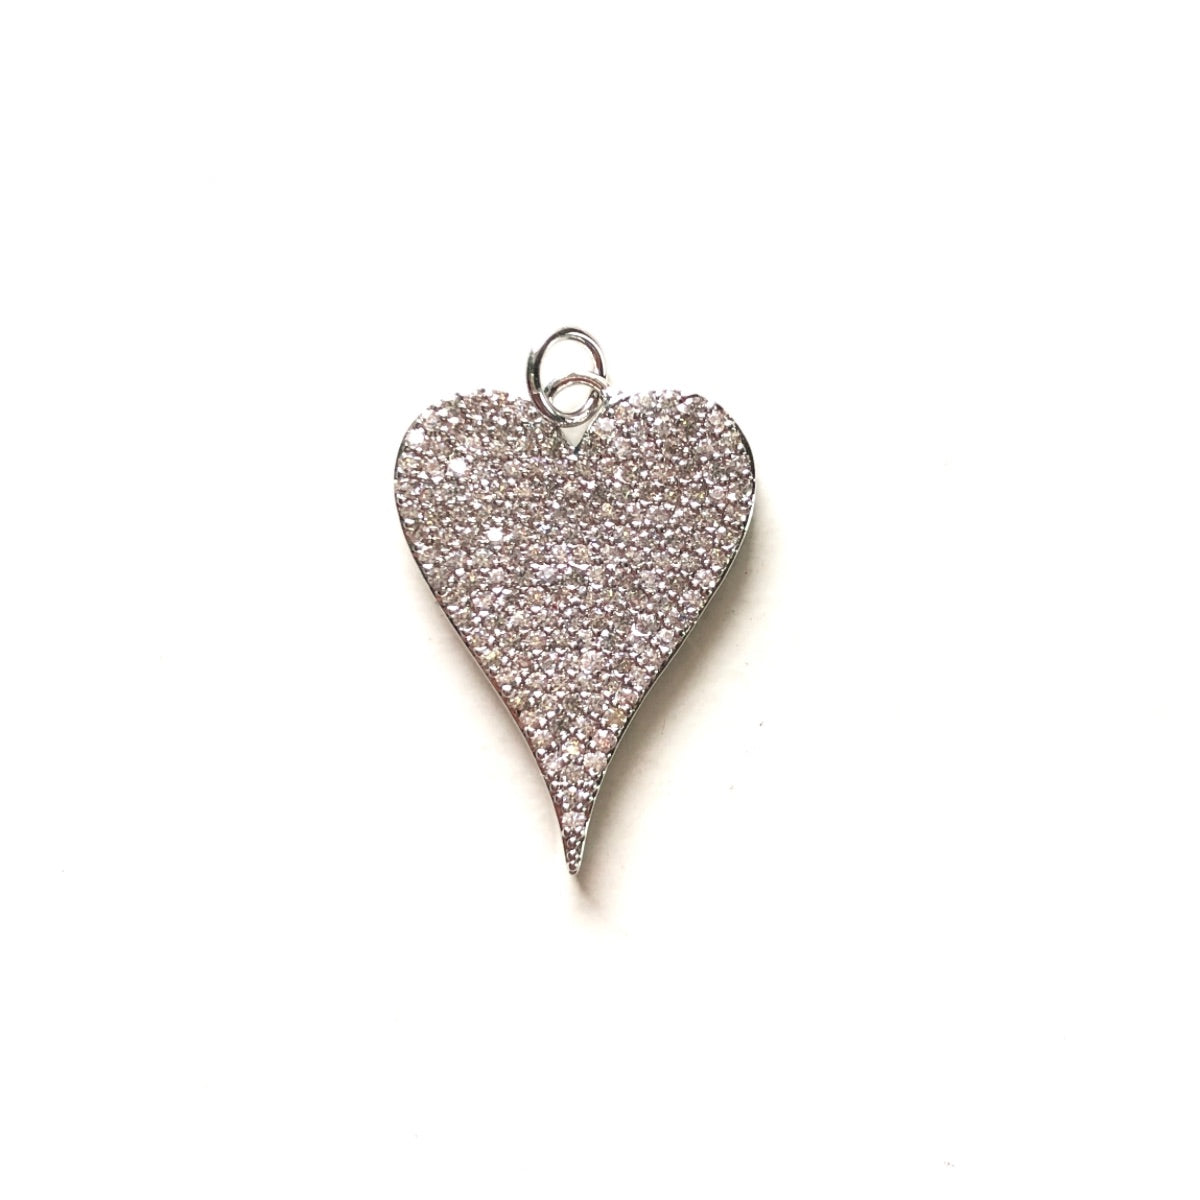 10pcs/lot 25*18mm CZ Paved Heart Charm Pendants Silver CZ Paved Charms Hearts Charms Beads Beyond